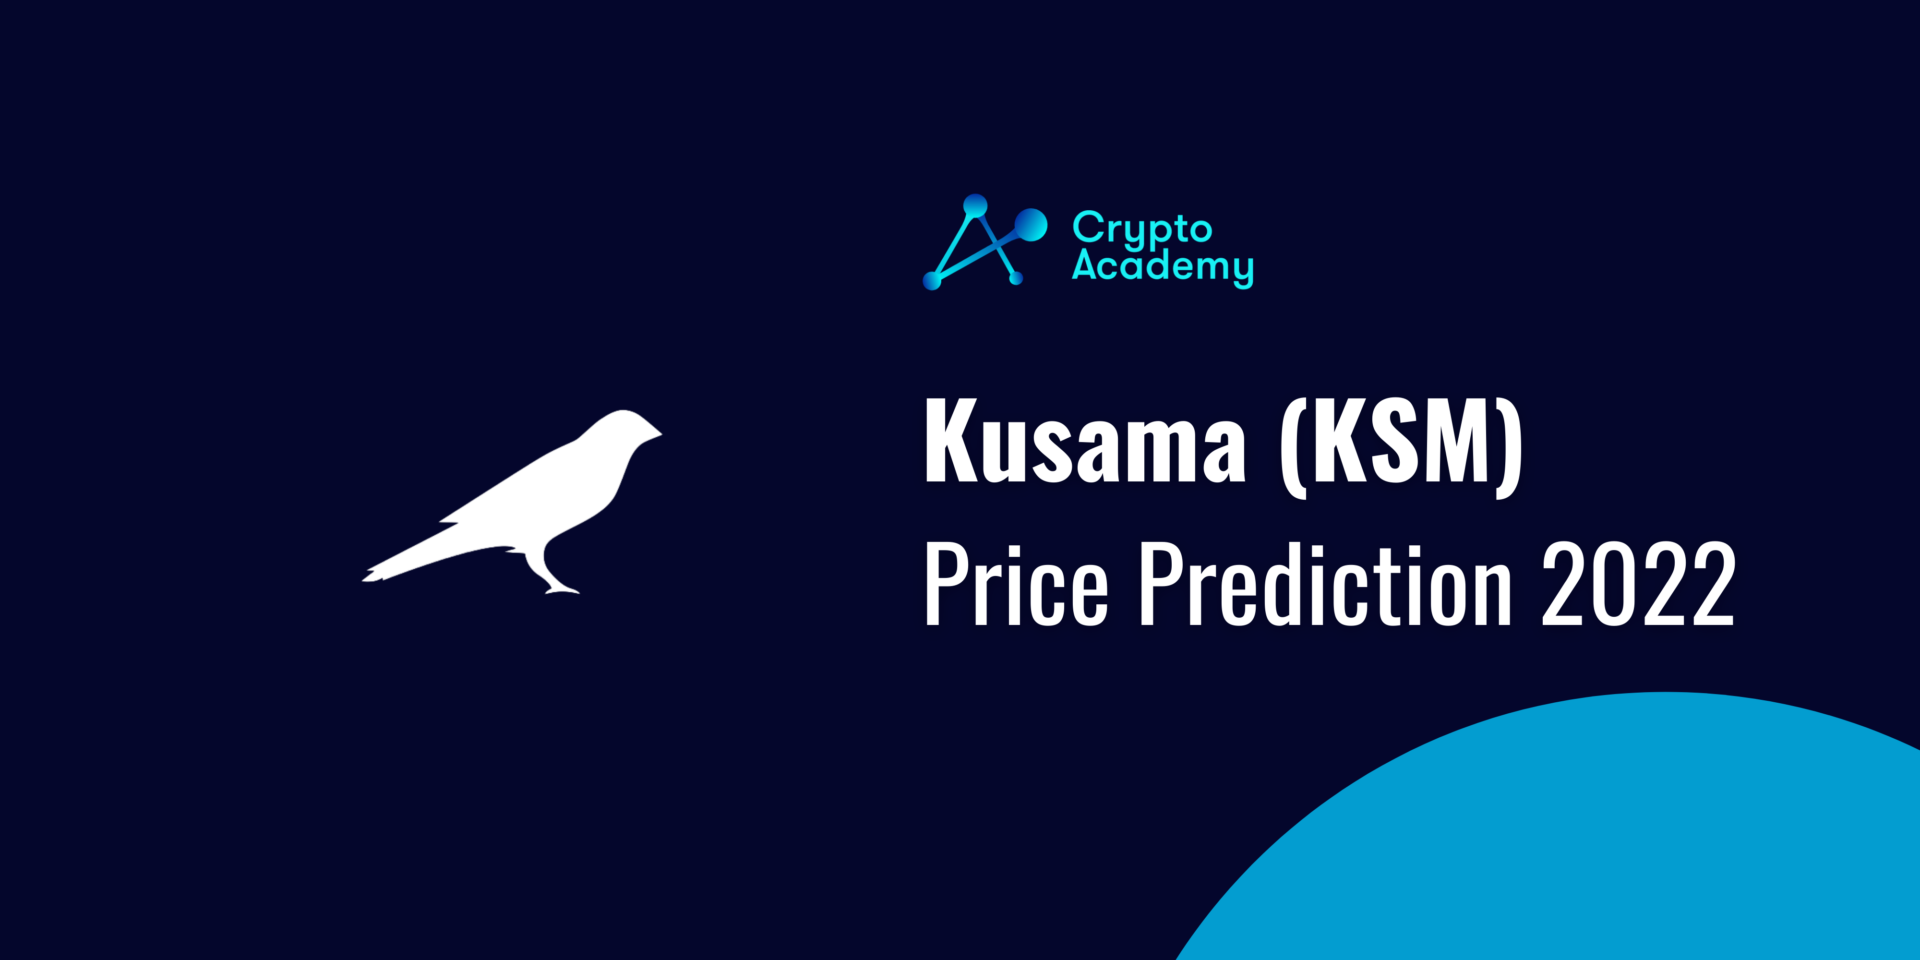 Kusama Price Prediction 2022 and Beyond - Will KSM Reach $1,000?